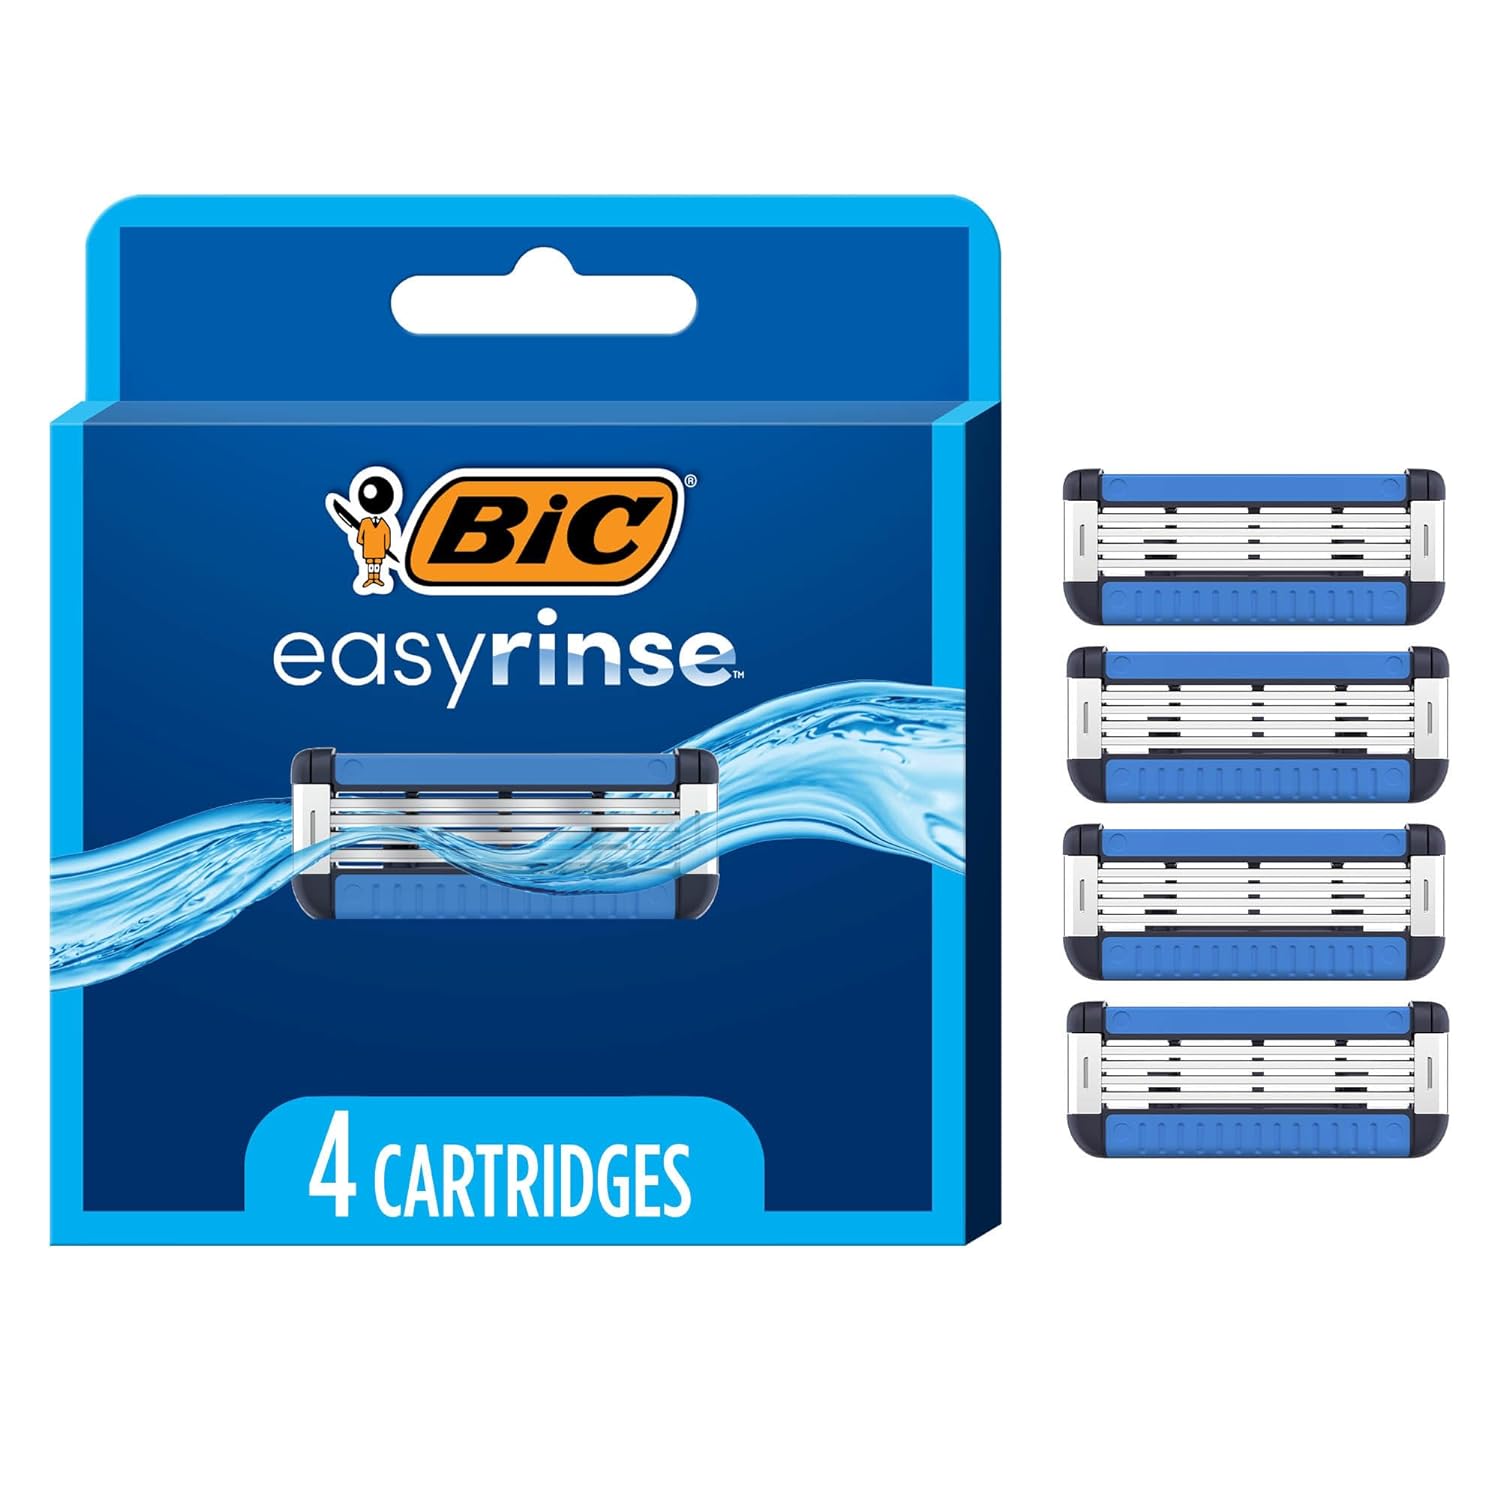 BIC EasyRinse Anti-Clogging Men' Razor Refills, Razor Cartridges With 4 Blades, 4 Count